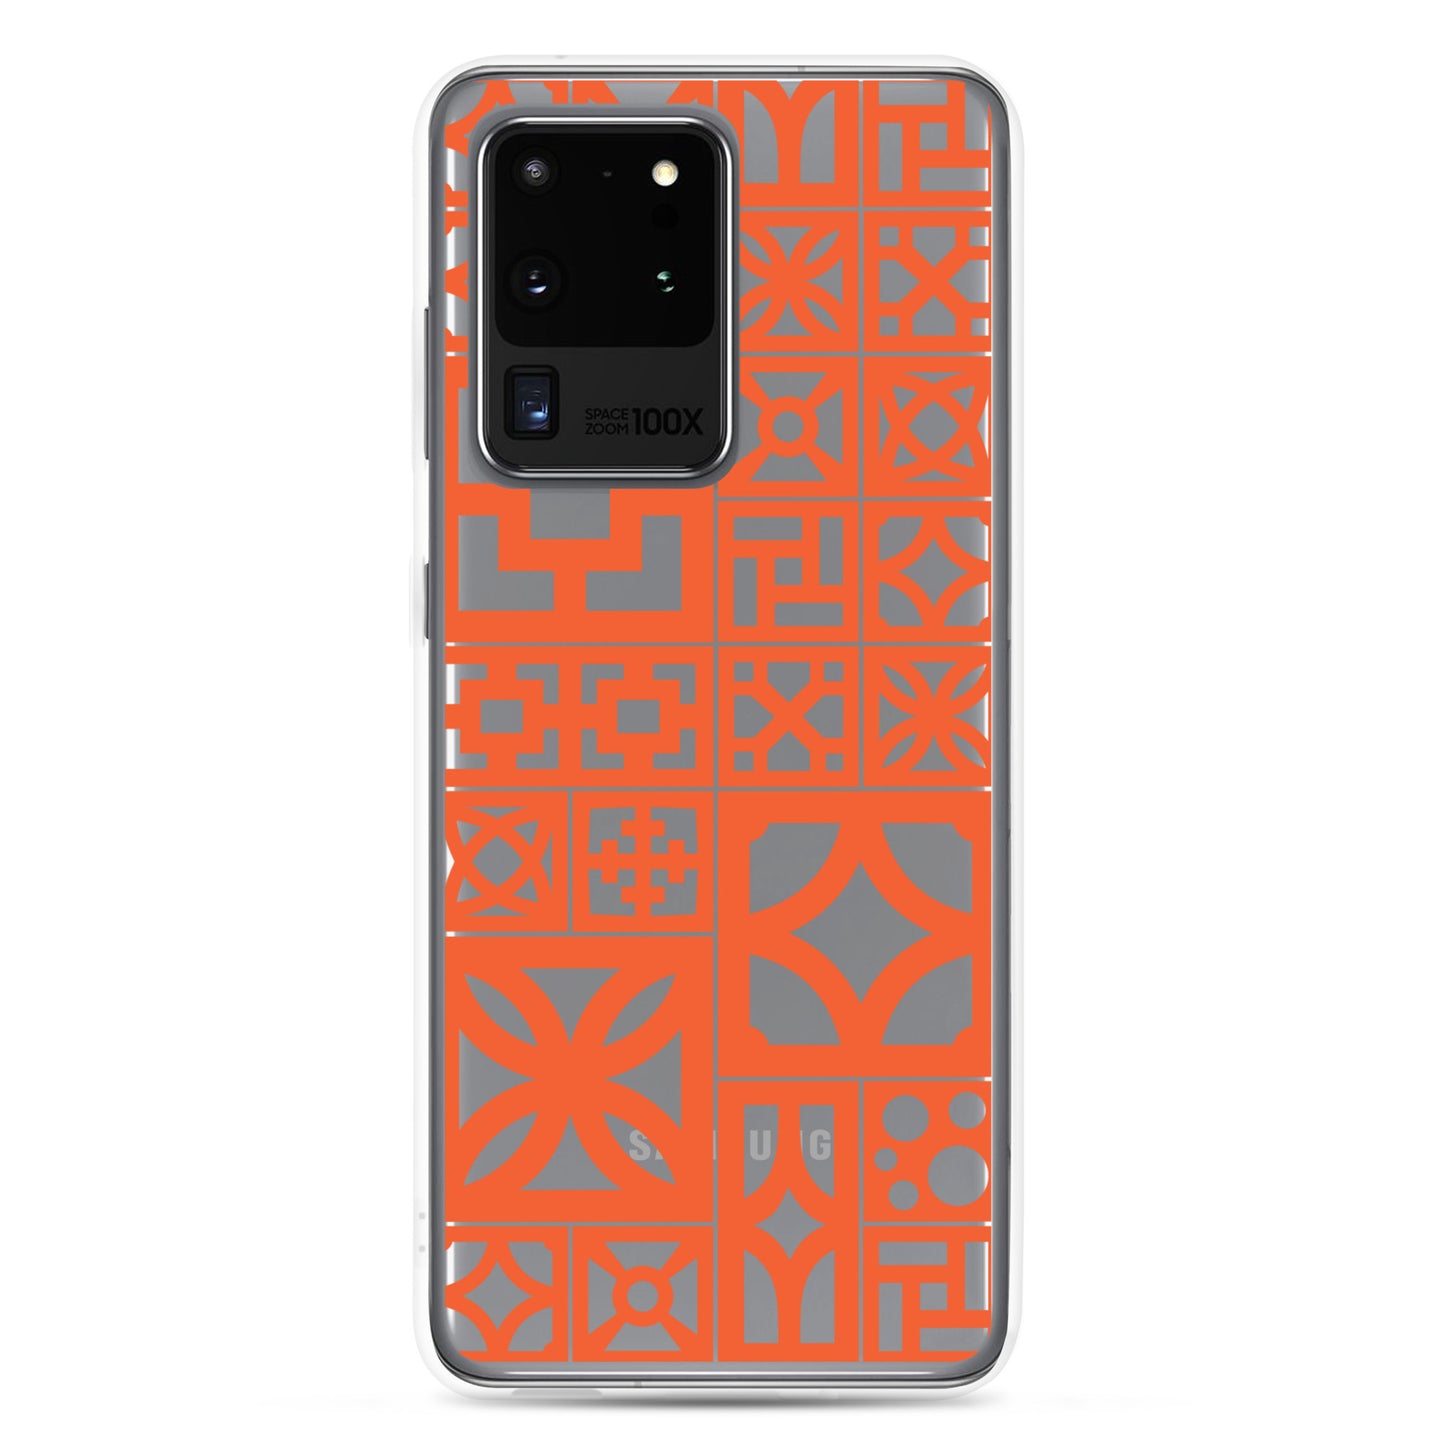 Clear Samsung Breeze Block "Motif" Case - Orange